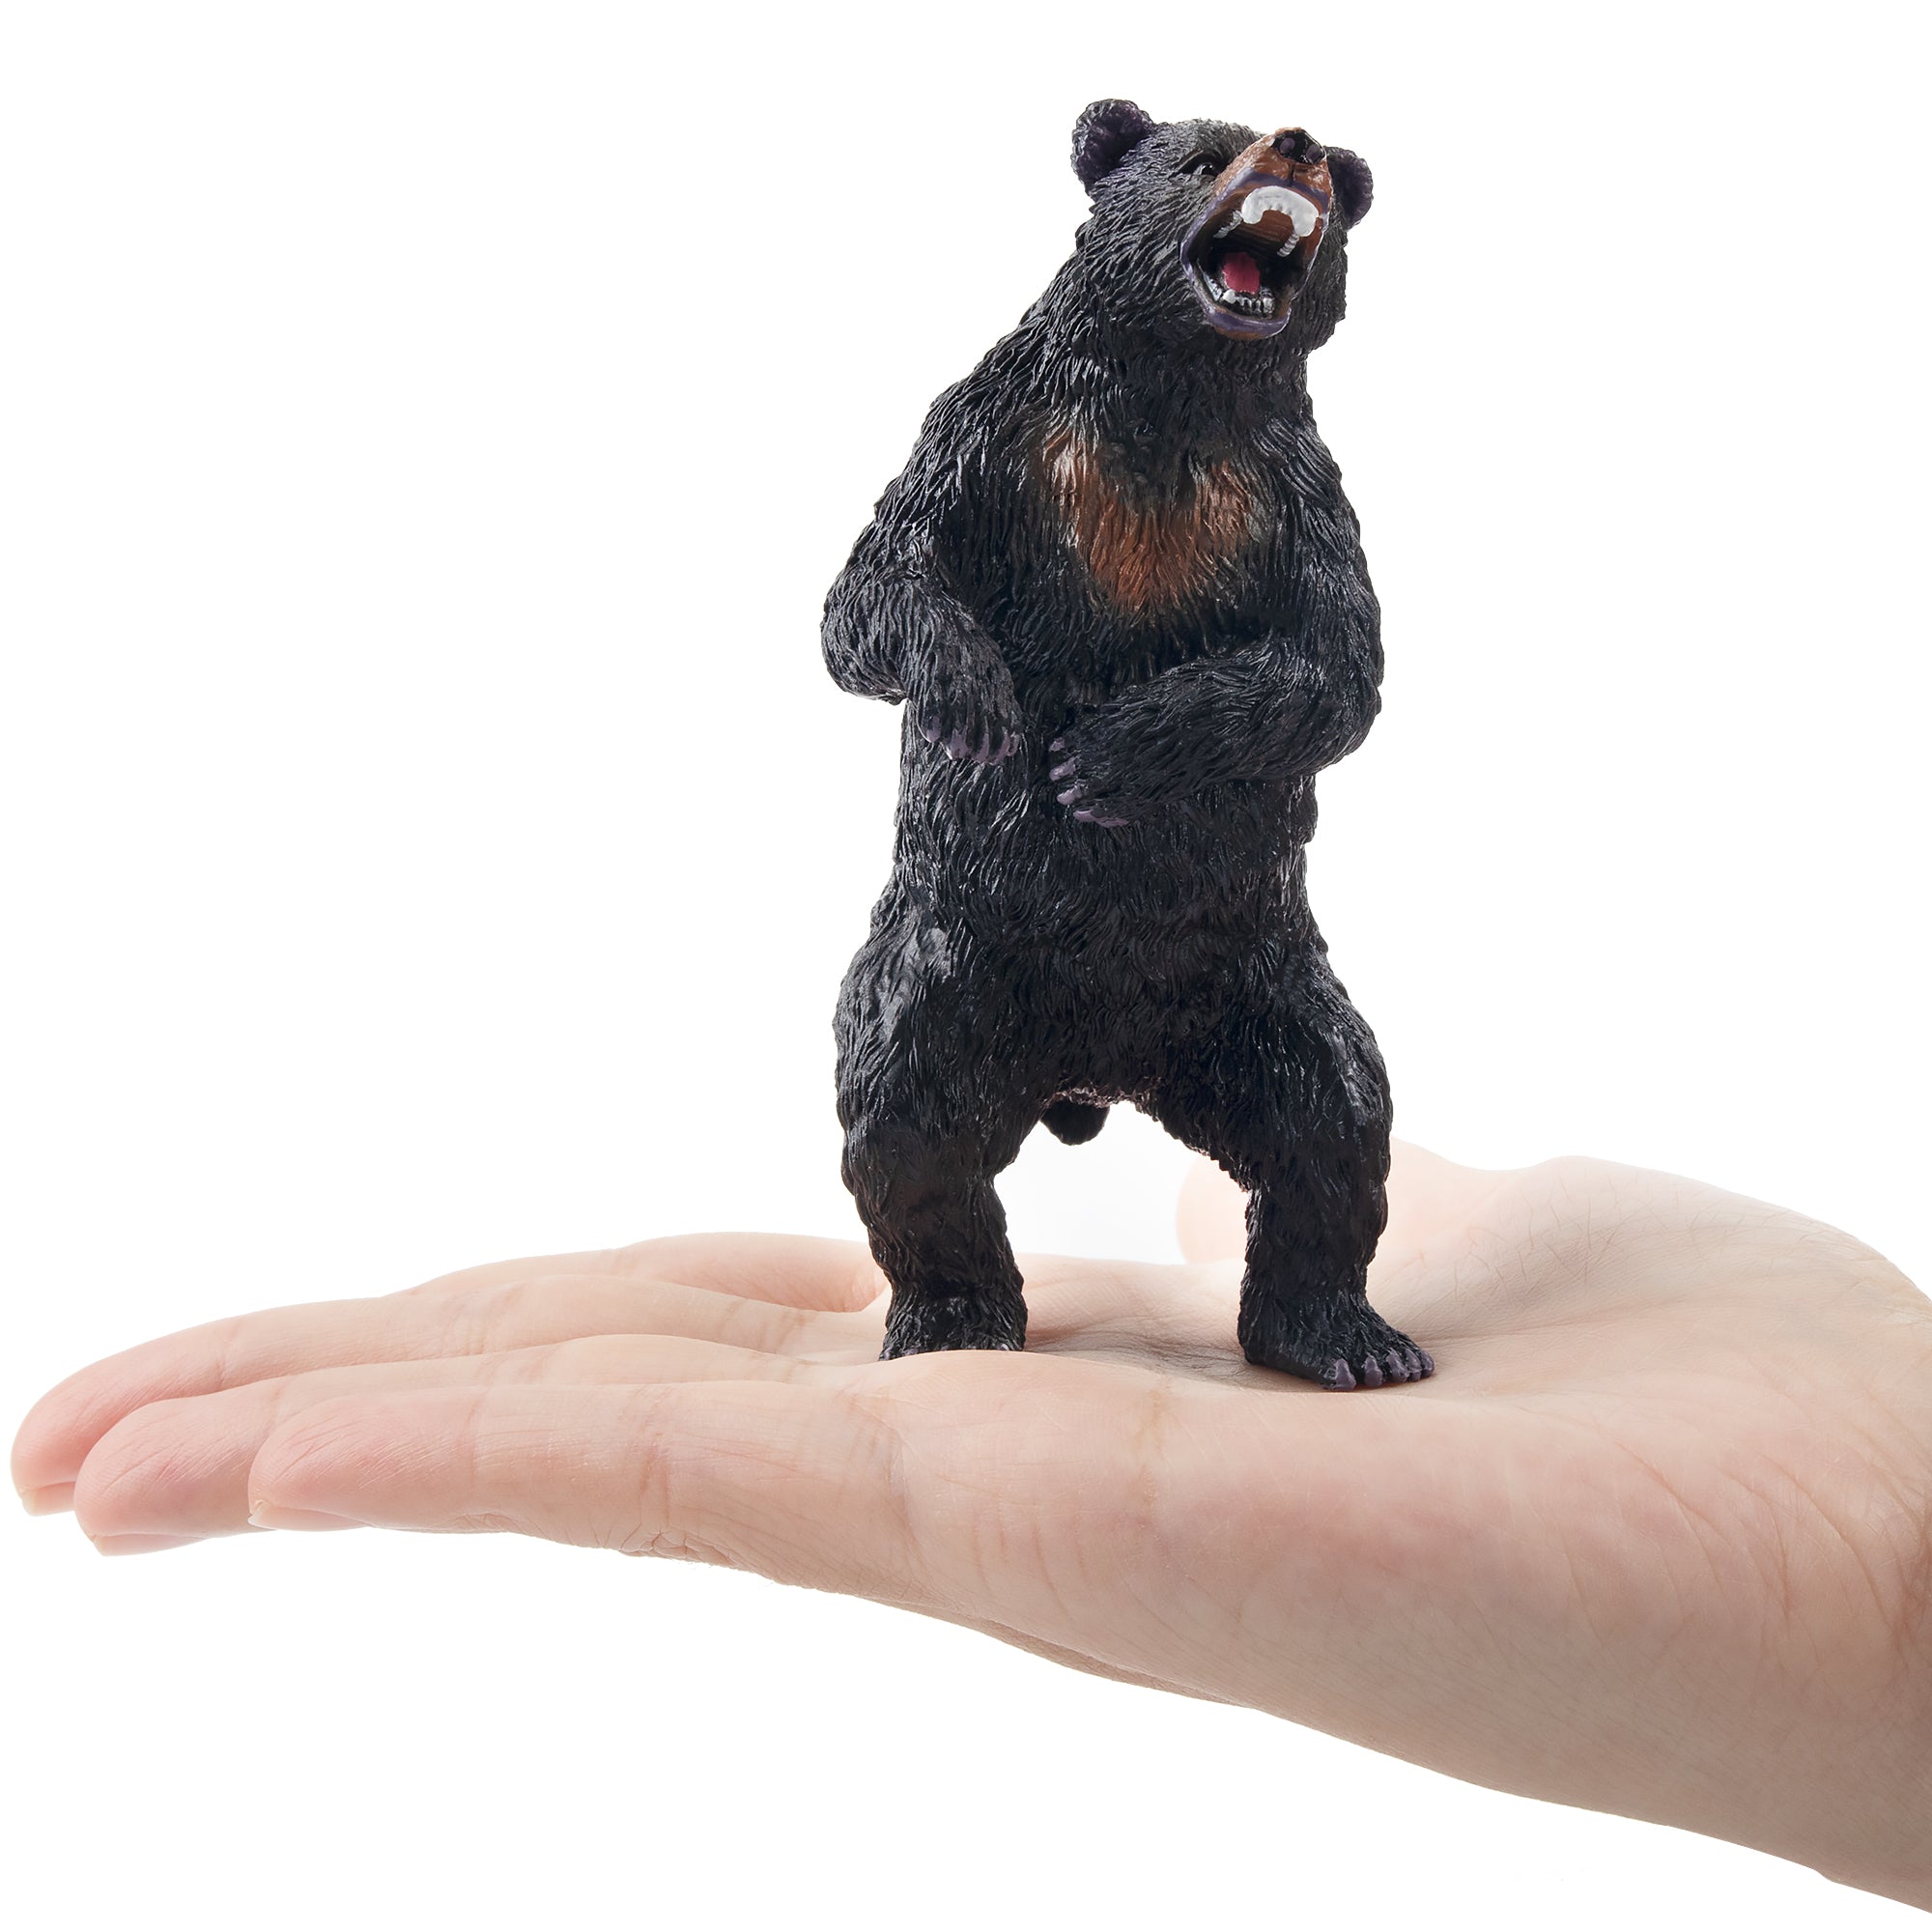 Toymany Standing Black Bear Figurine Toy-on hand